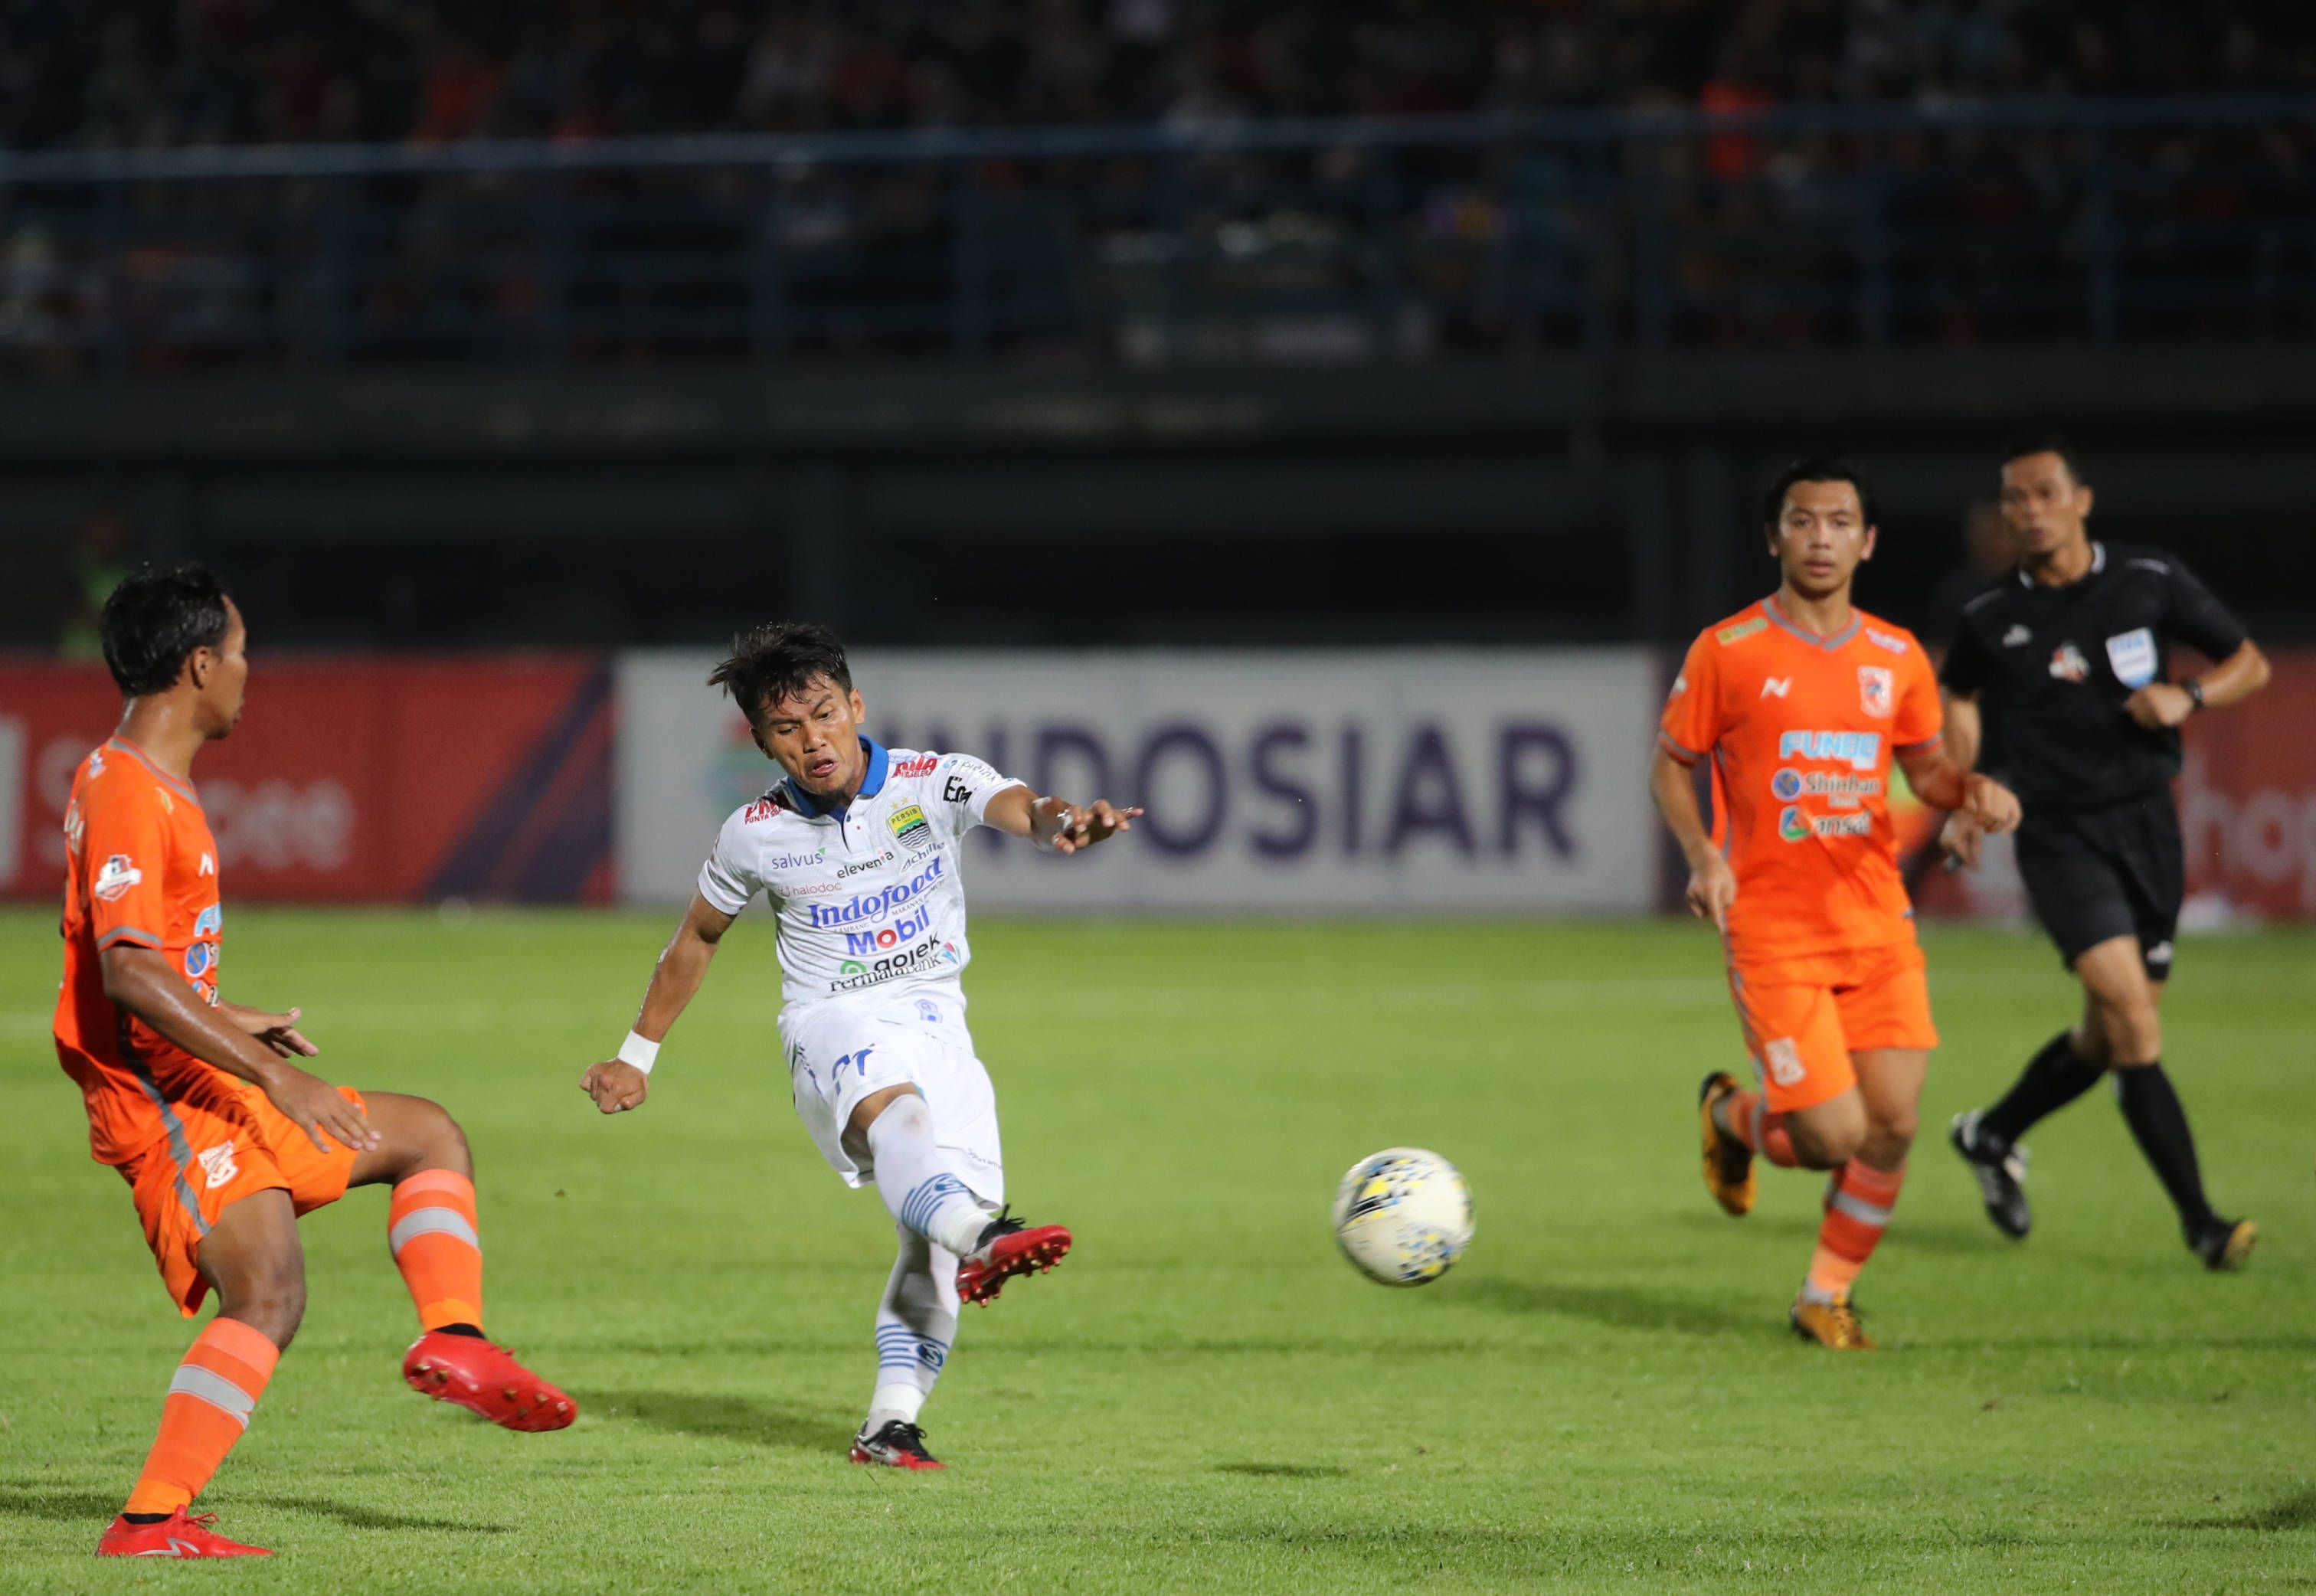 PEMAIN Persib Bandung Gozali Siregar mencetak gol ke gawang Borneo FC pada pertandingan Shopee Liga 1 di Stadion Segiri, Samarinda, Kalimantan Timur, Rabu 11 Desember 2019.*